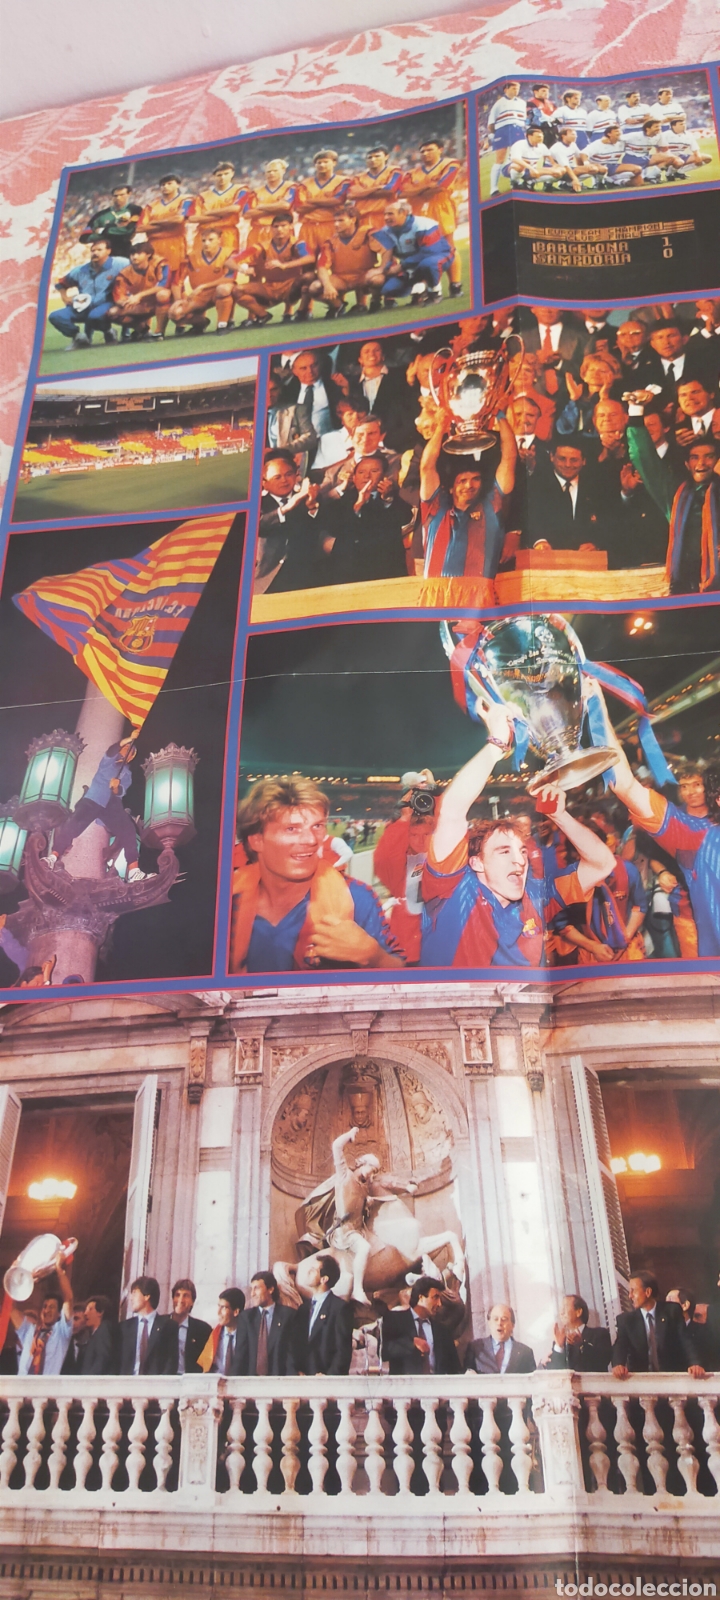 Coleccionismo deportivo: Poster del Barça estado de Wembley temporada 1991-92 primera copa de Europa contra la Sampdoria - Foto 6 - 296835463